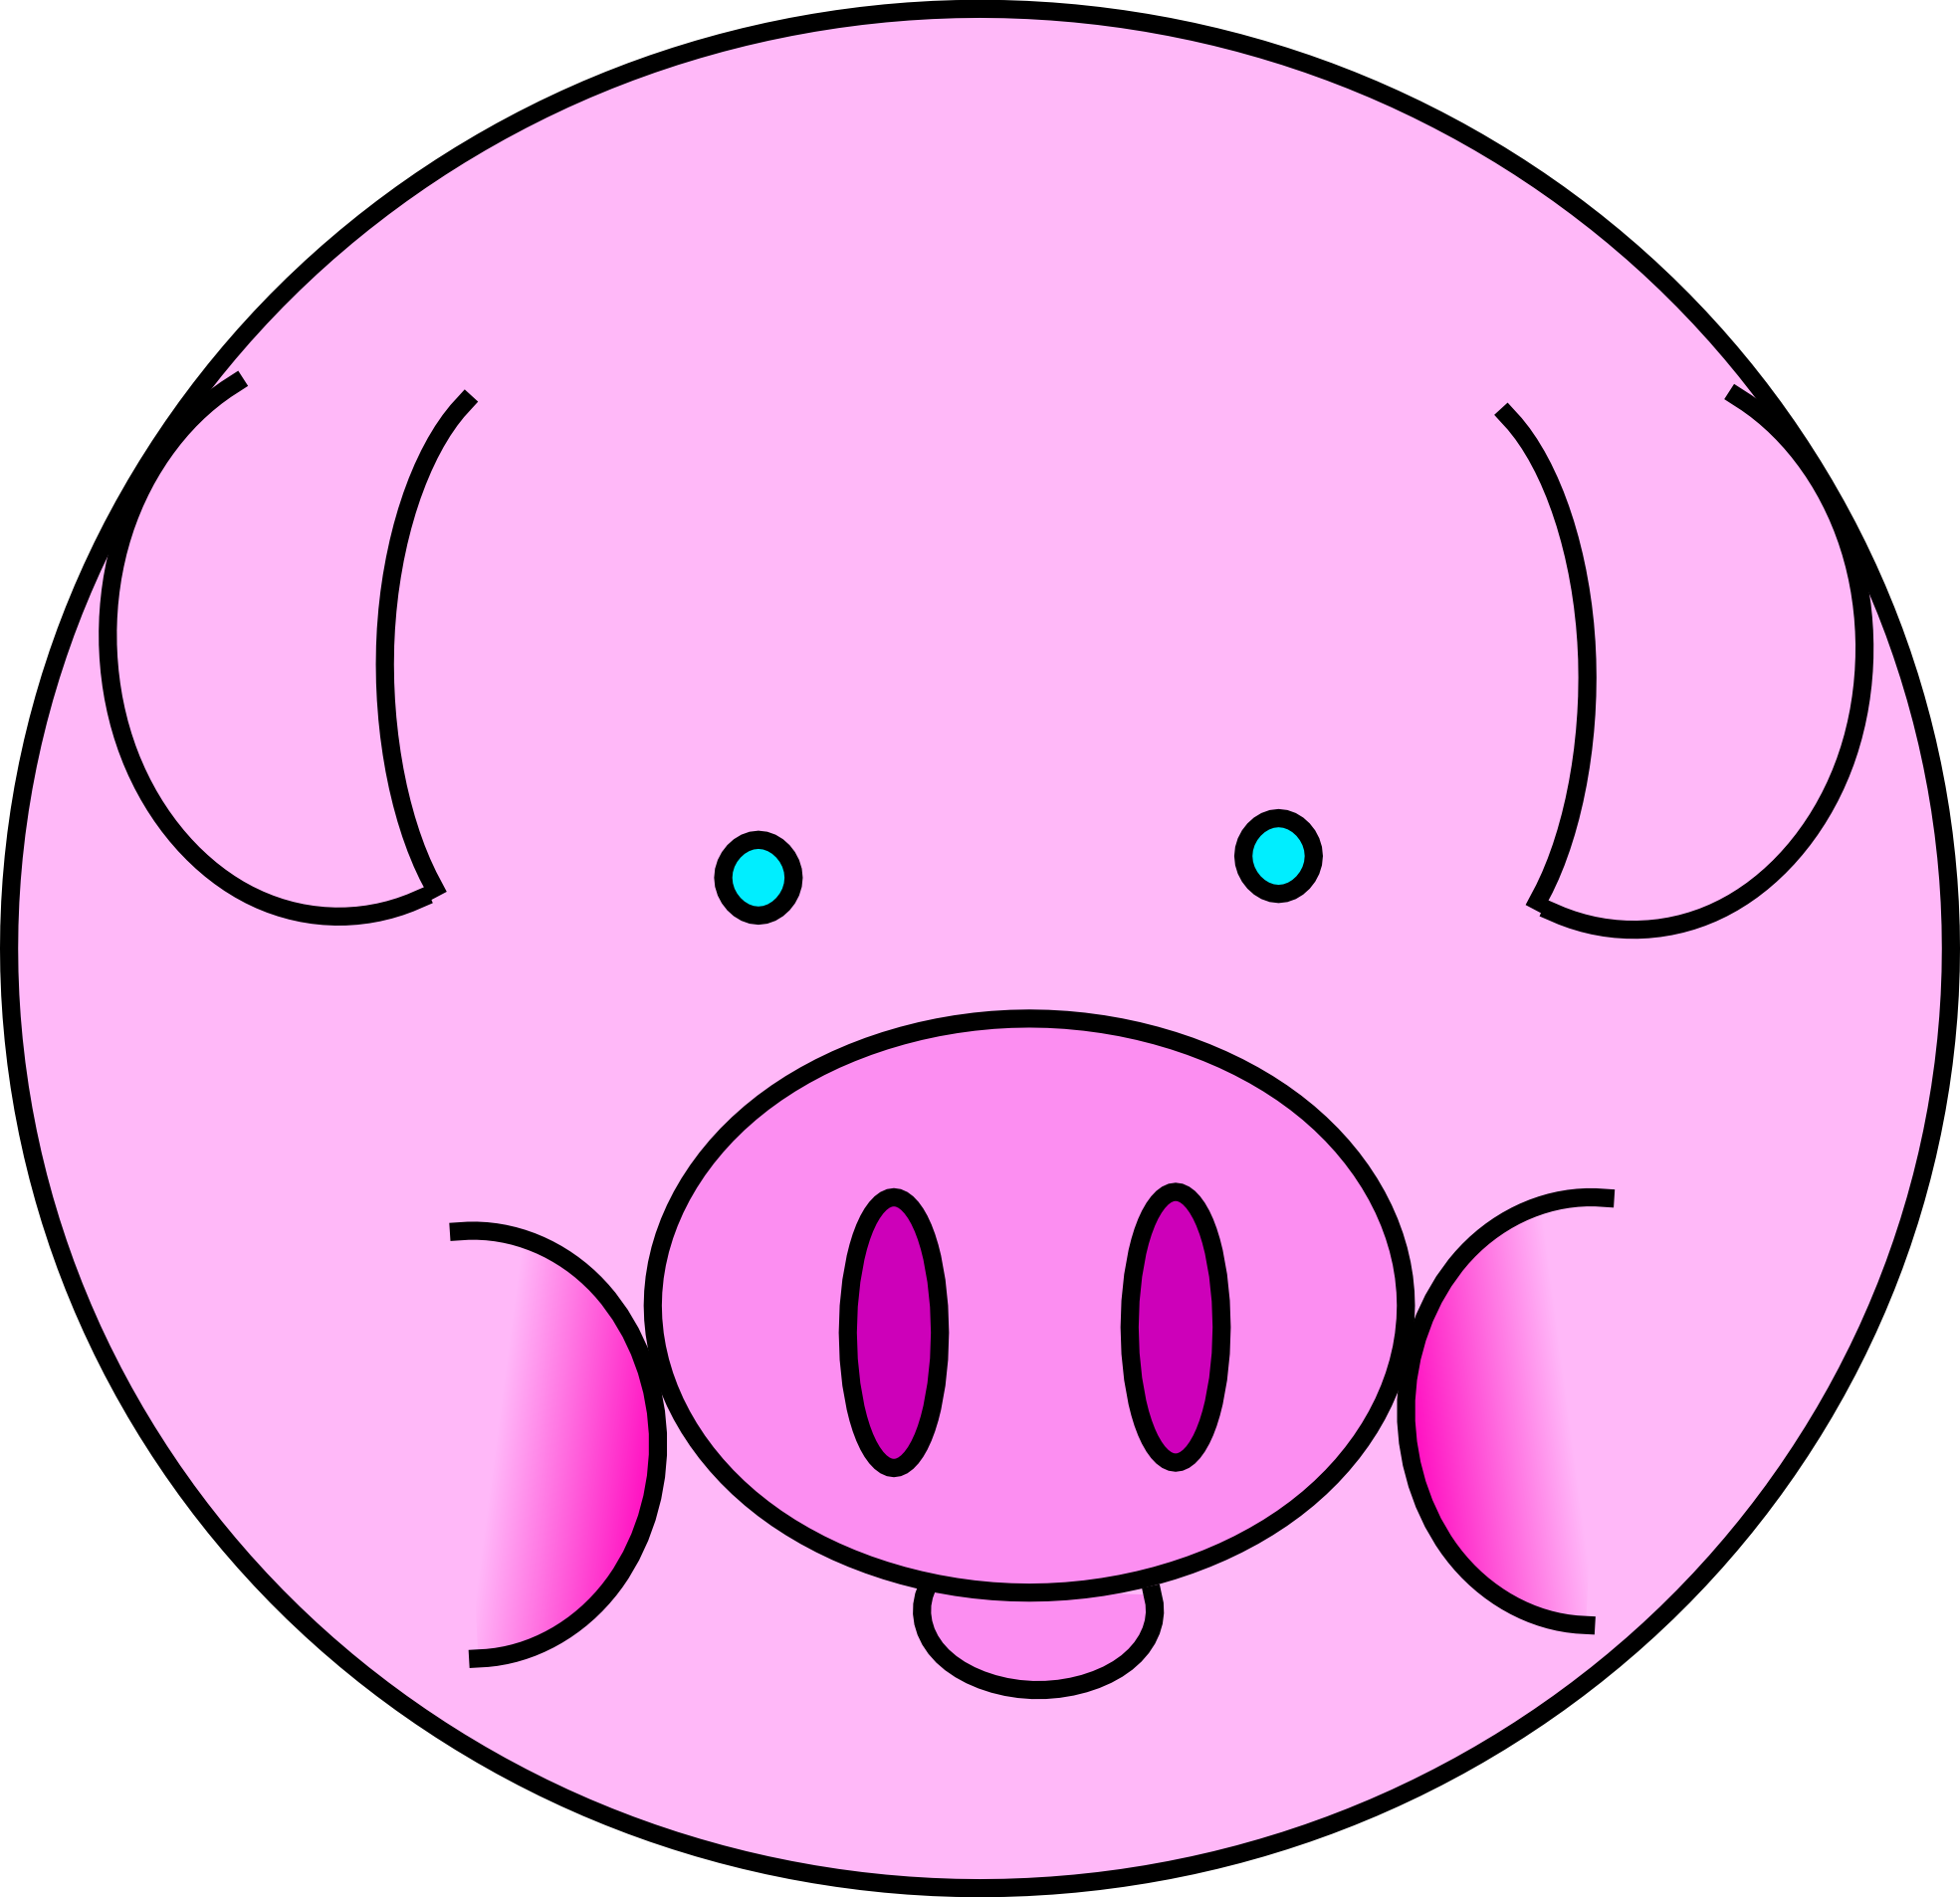 pig nose clipart - photo #16